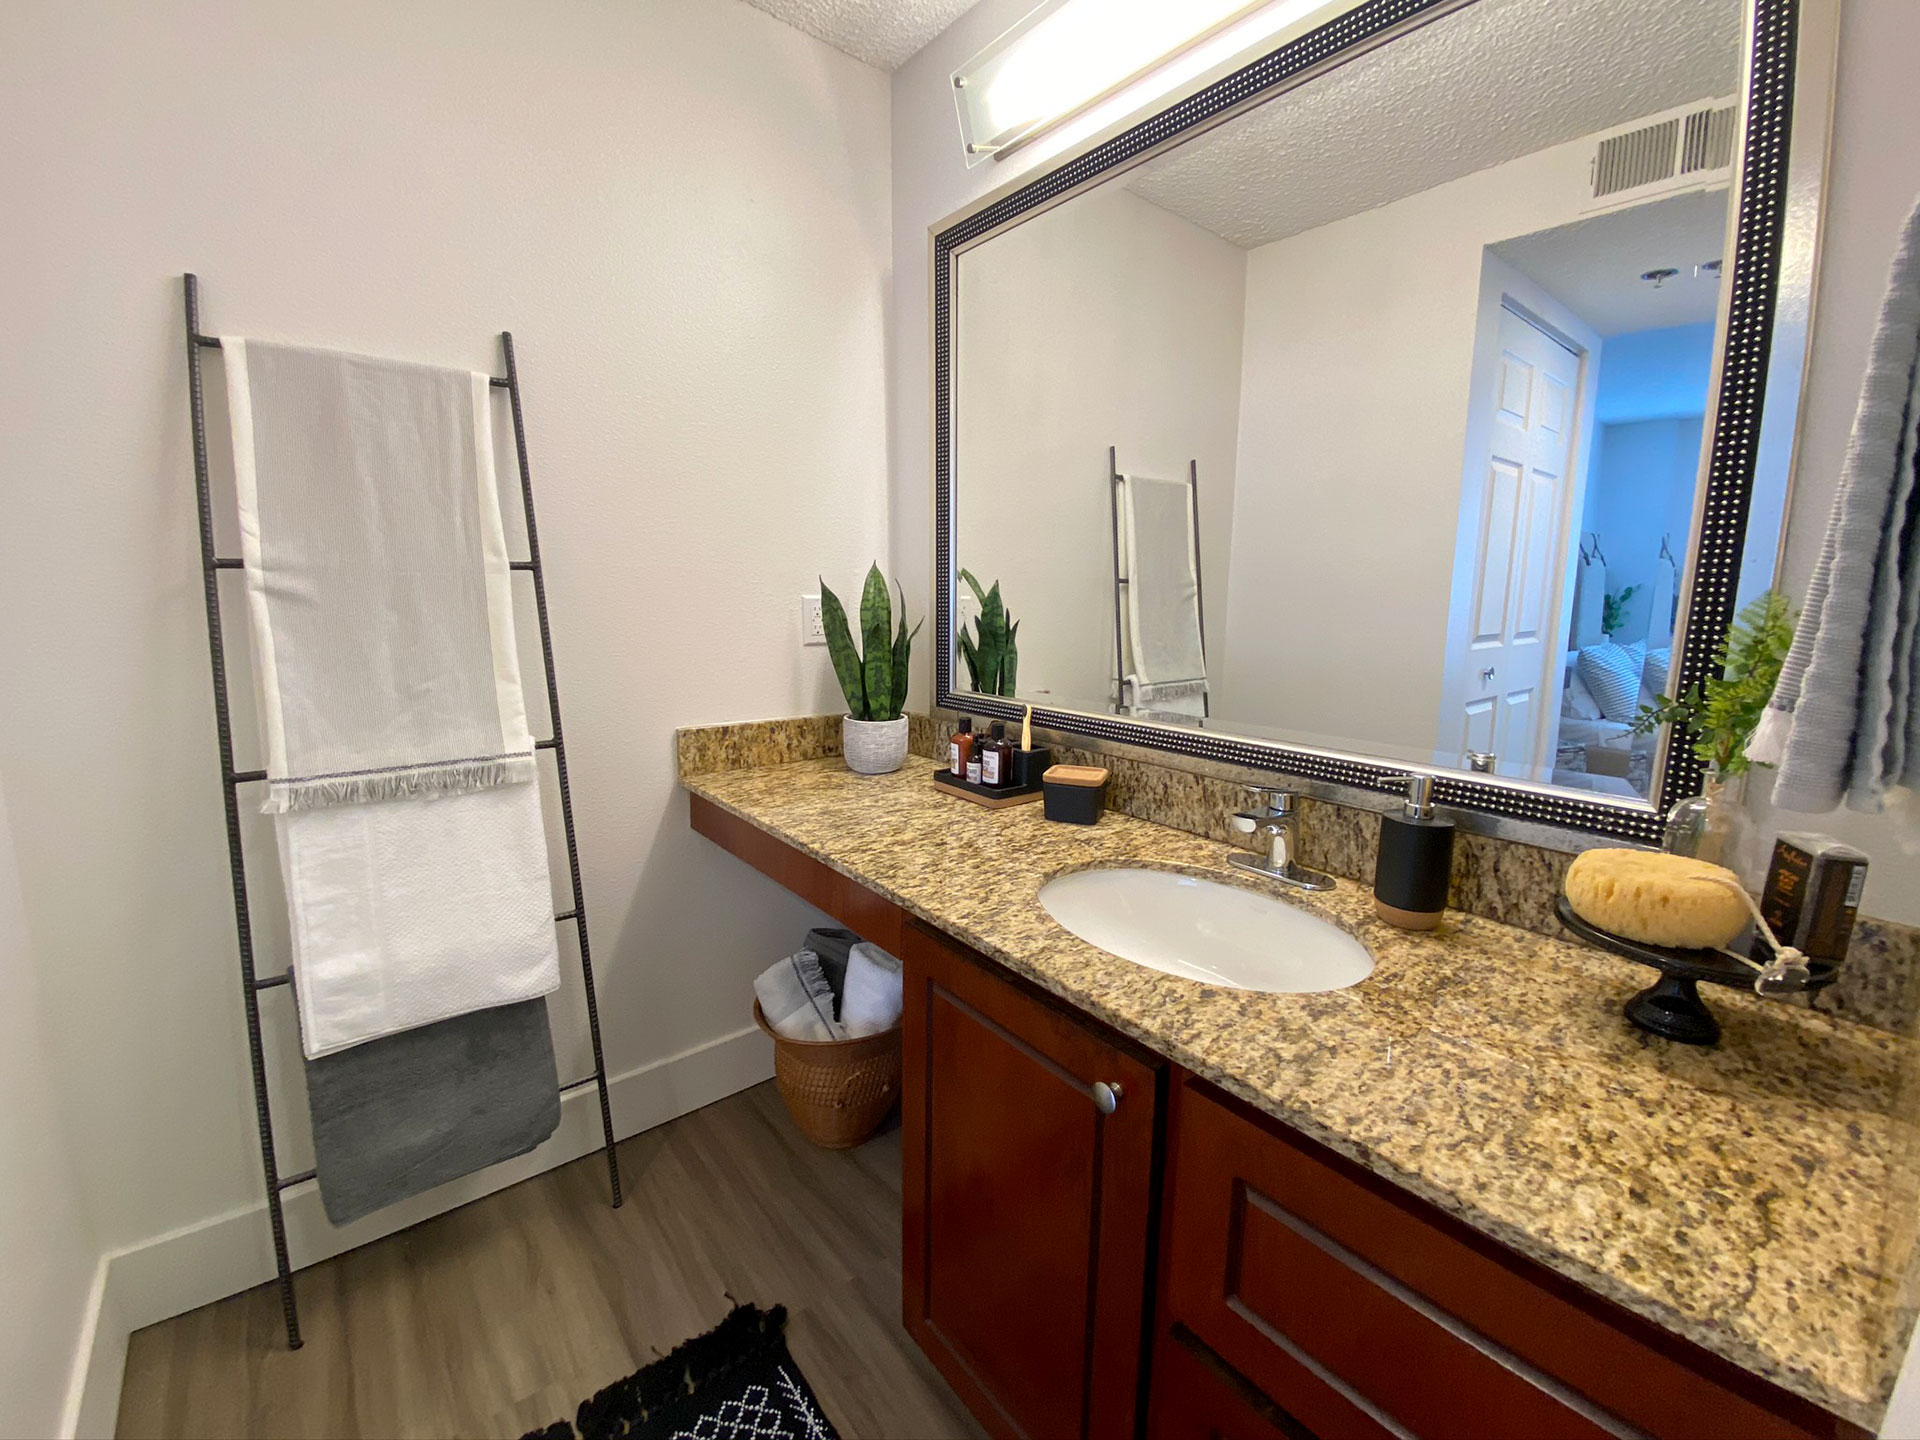 Long bathroom vanity with granite countertops.